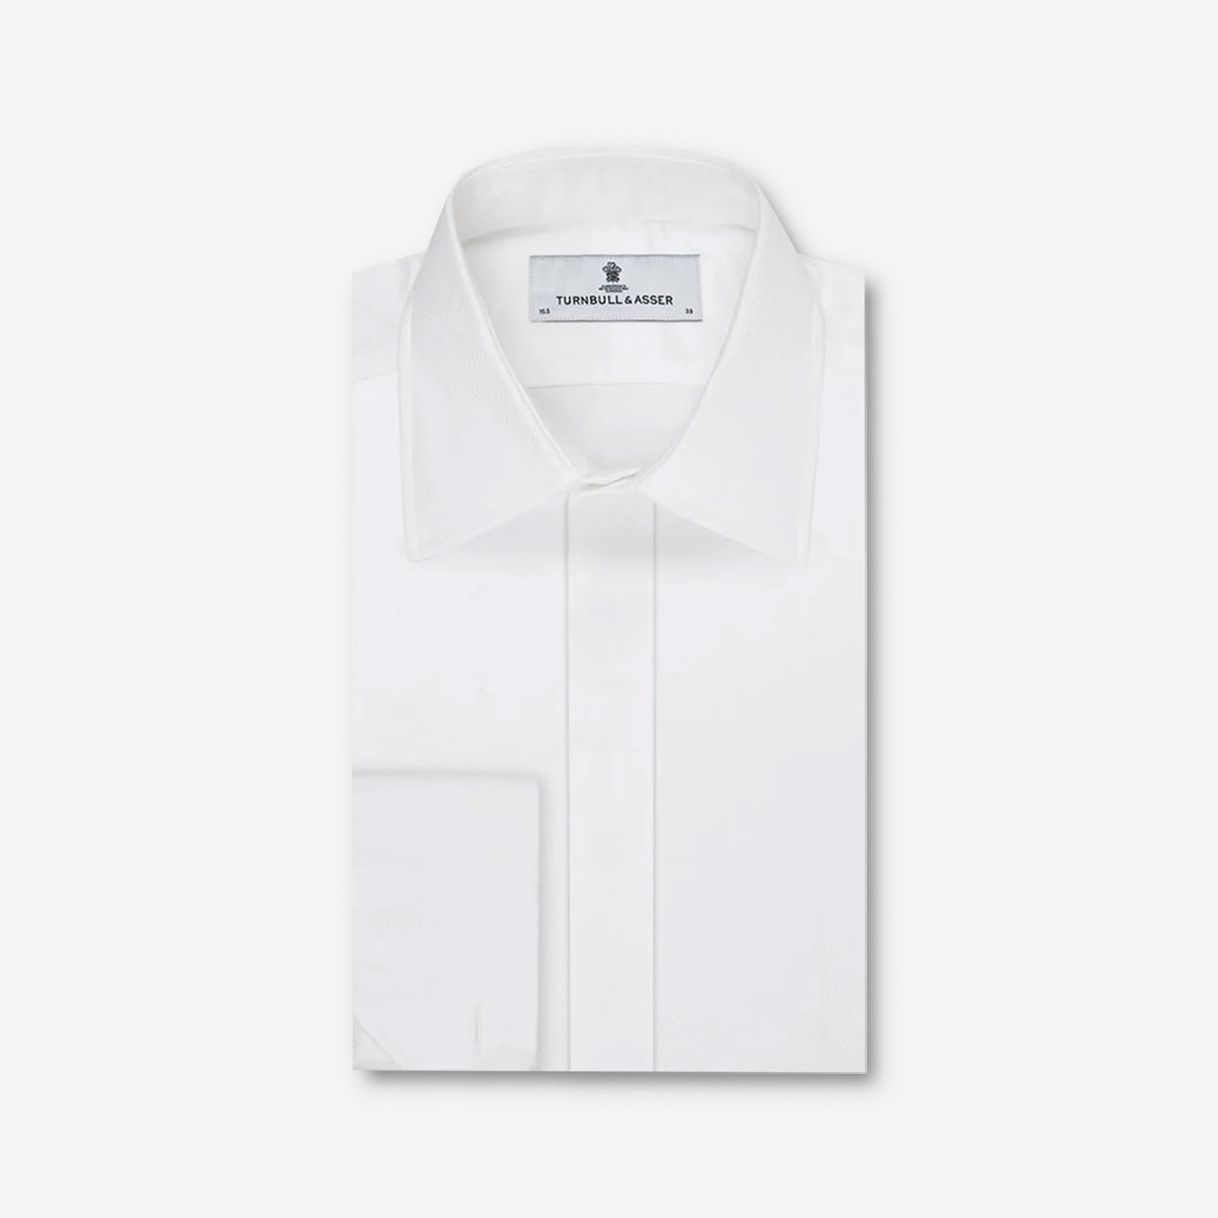 Casino Royale White Dress Shirt 